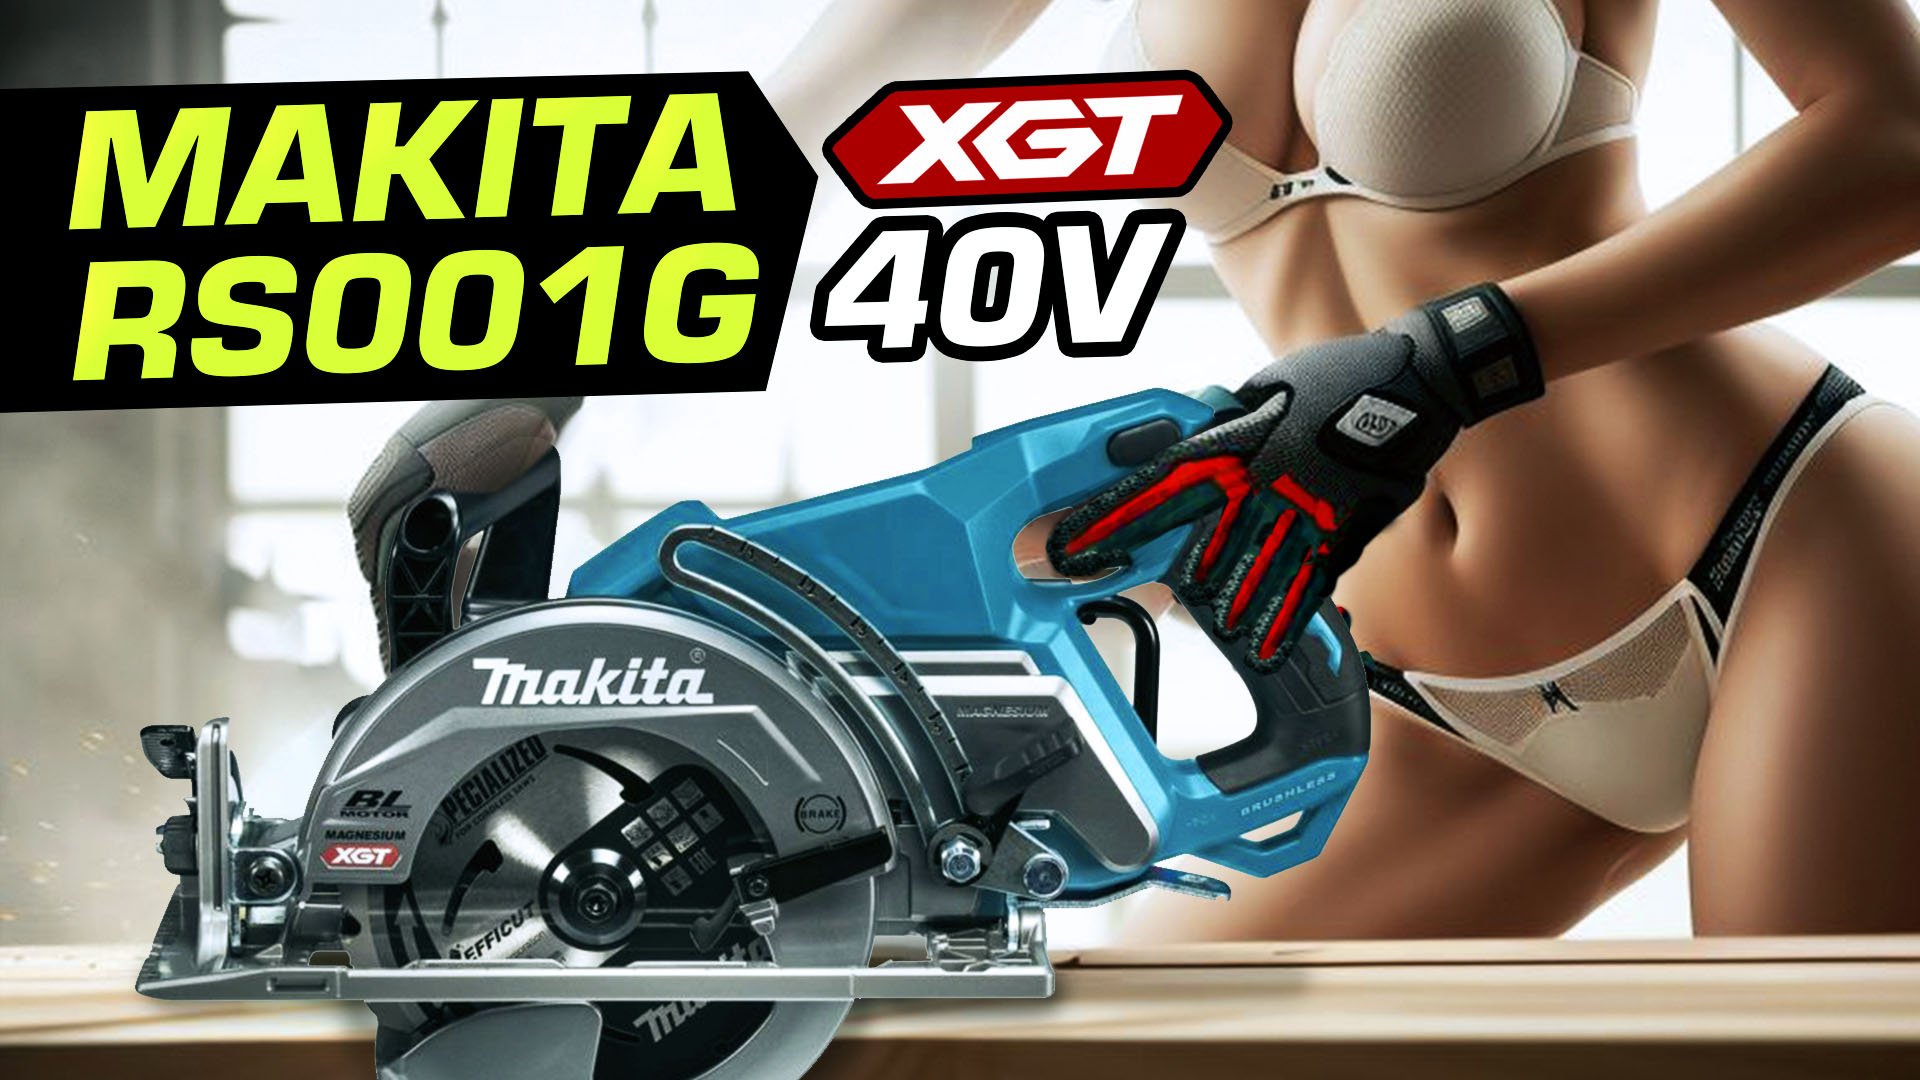 Makita XGT RS001Gz. Мечта любого плотника! Обзор, замеры мощности и сравнение с DHS680.